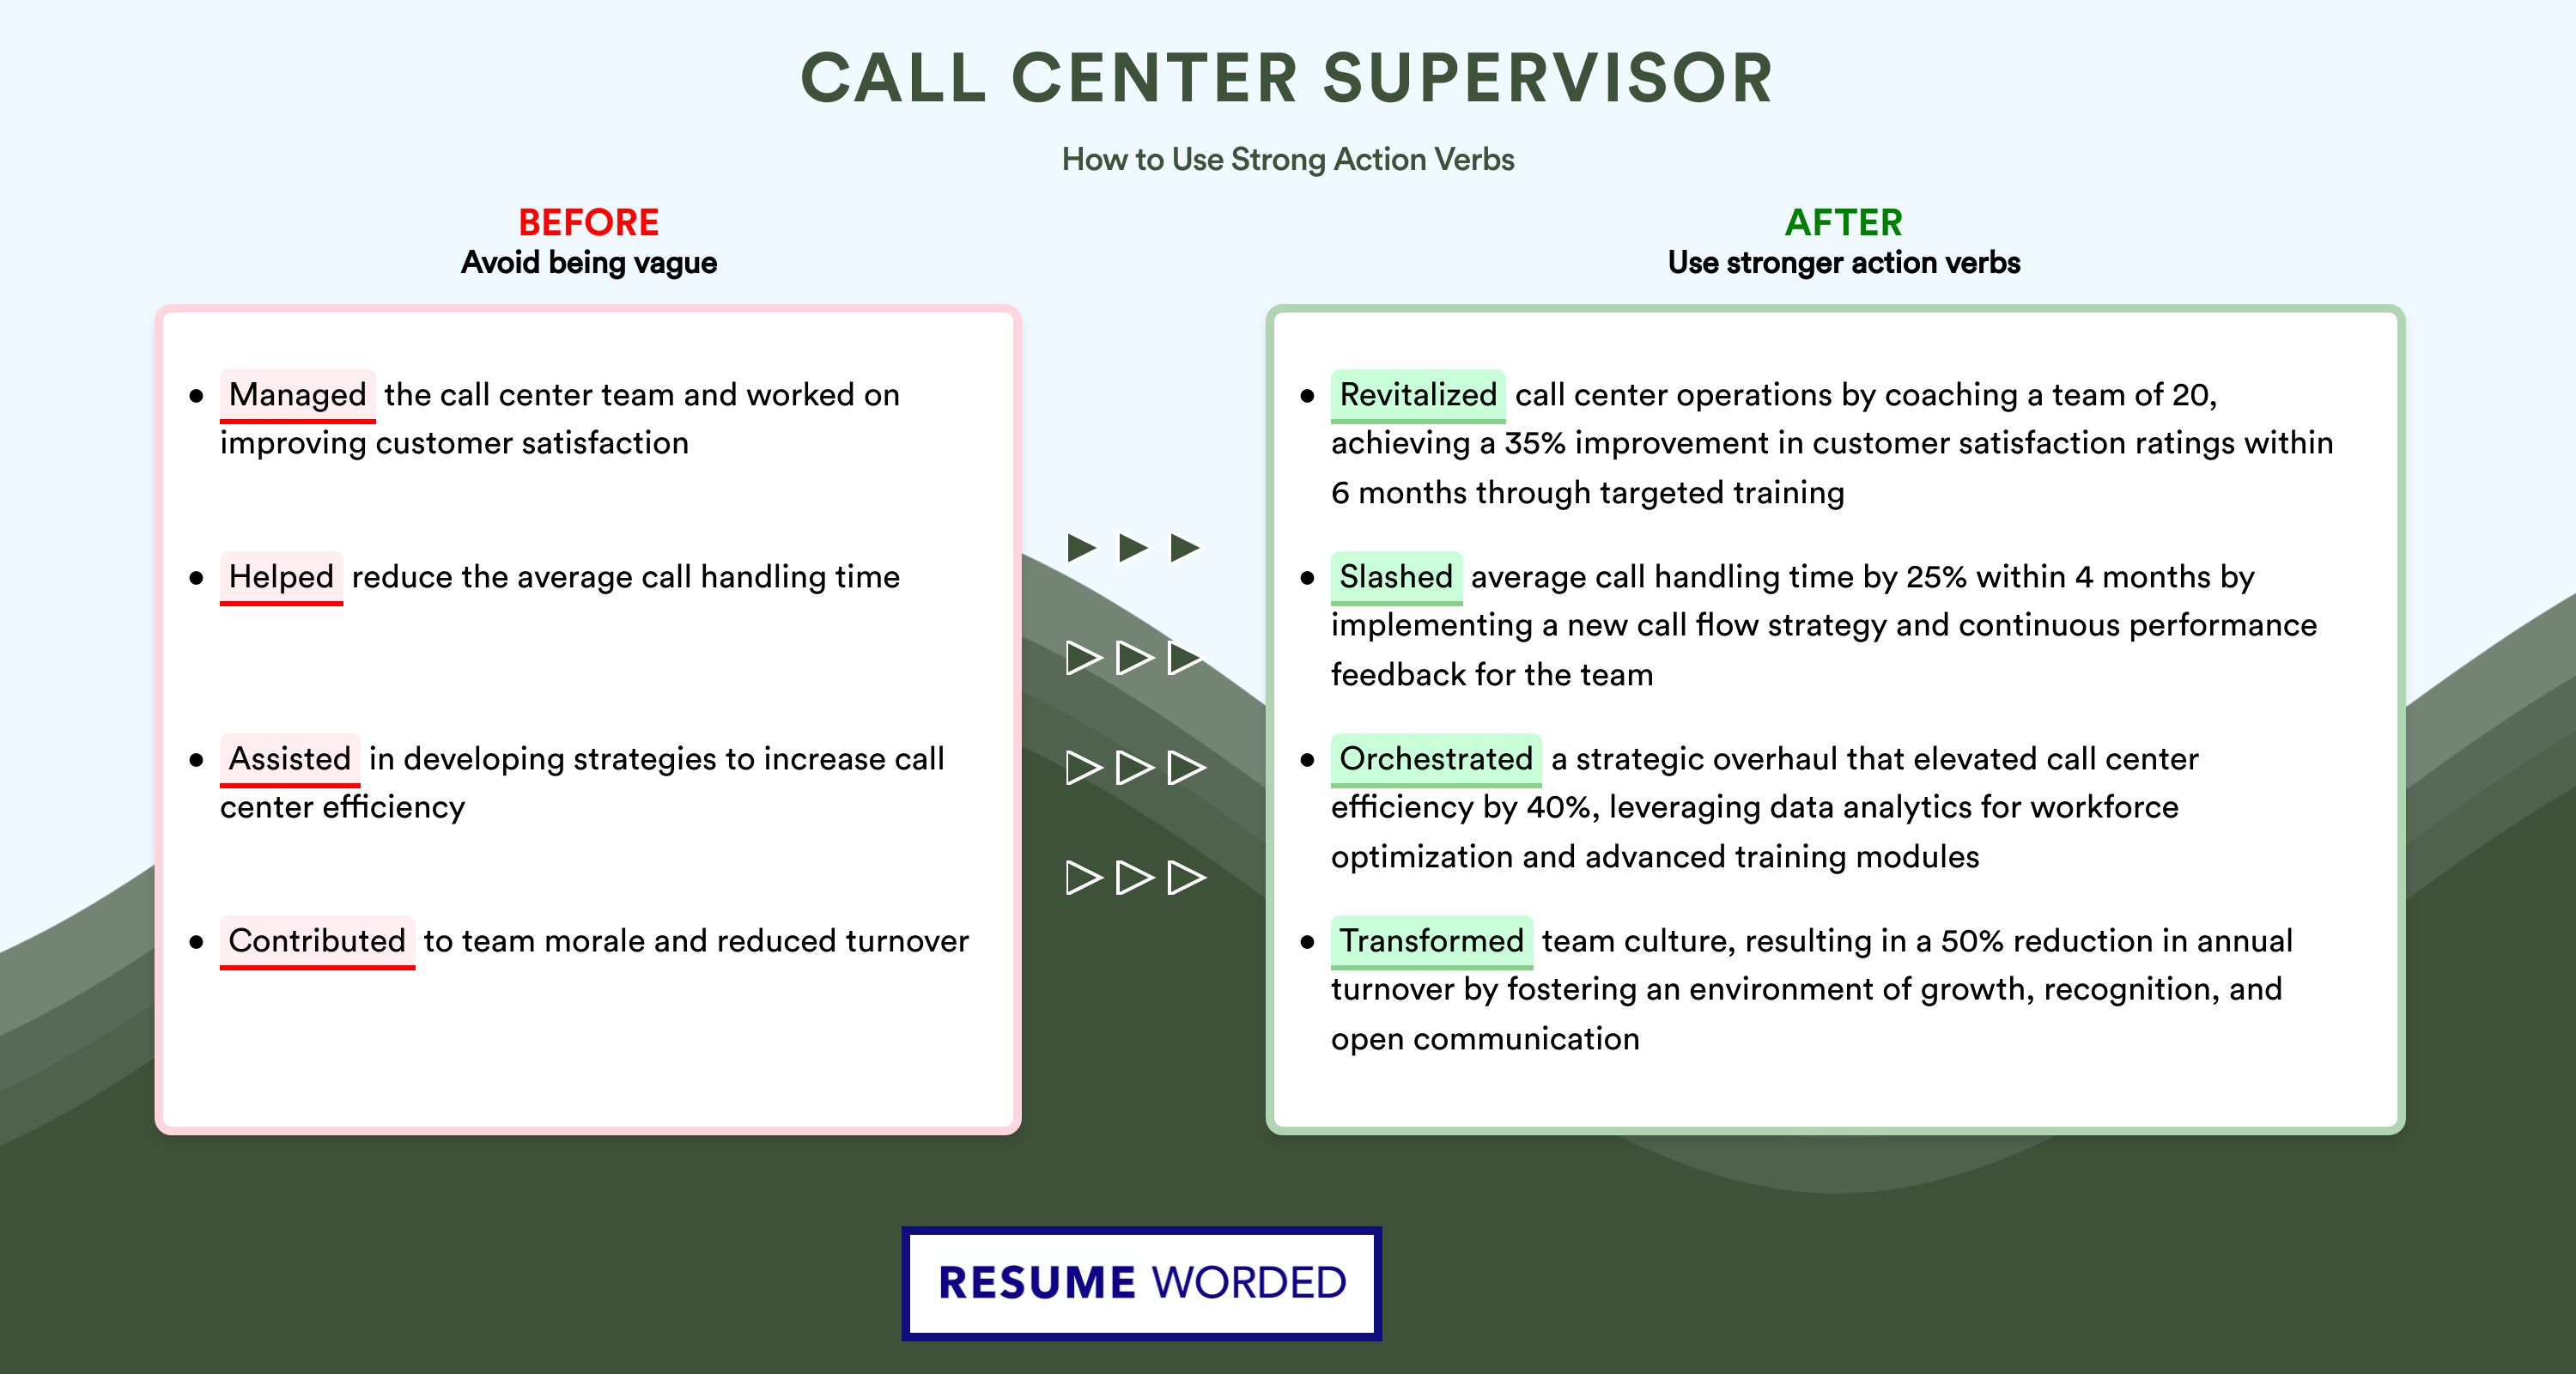 Action Verbs for Call Center Supervisor